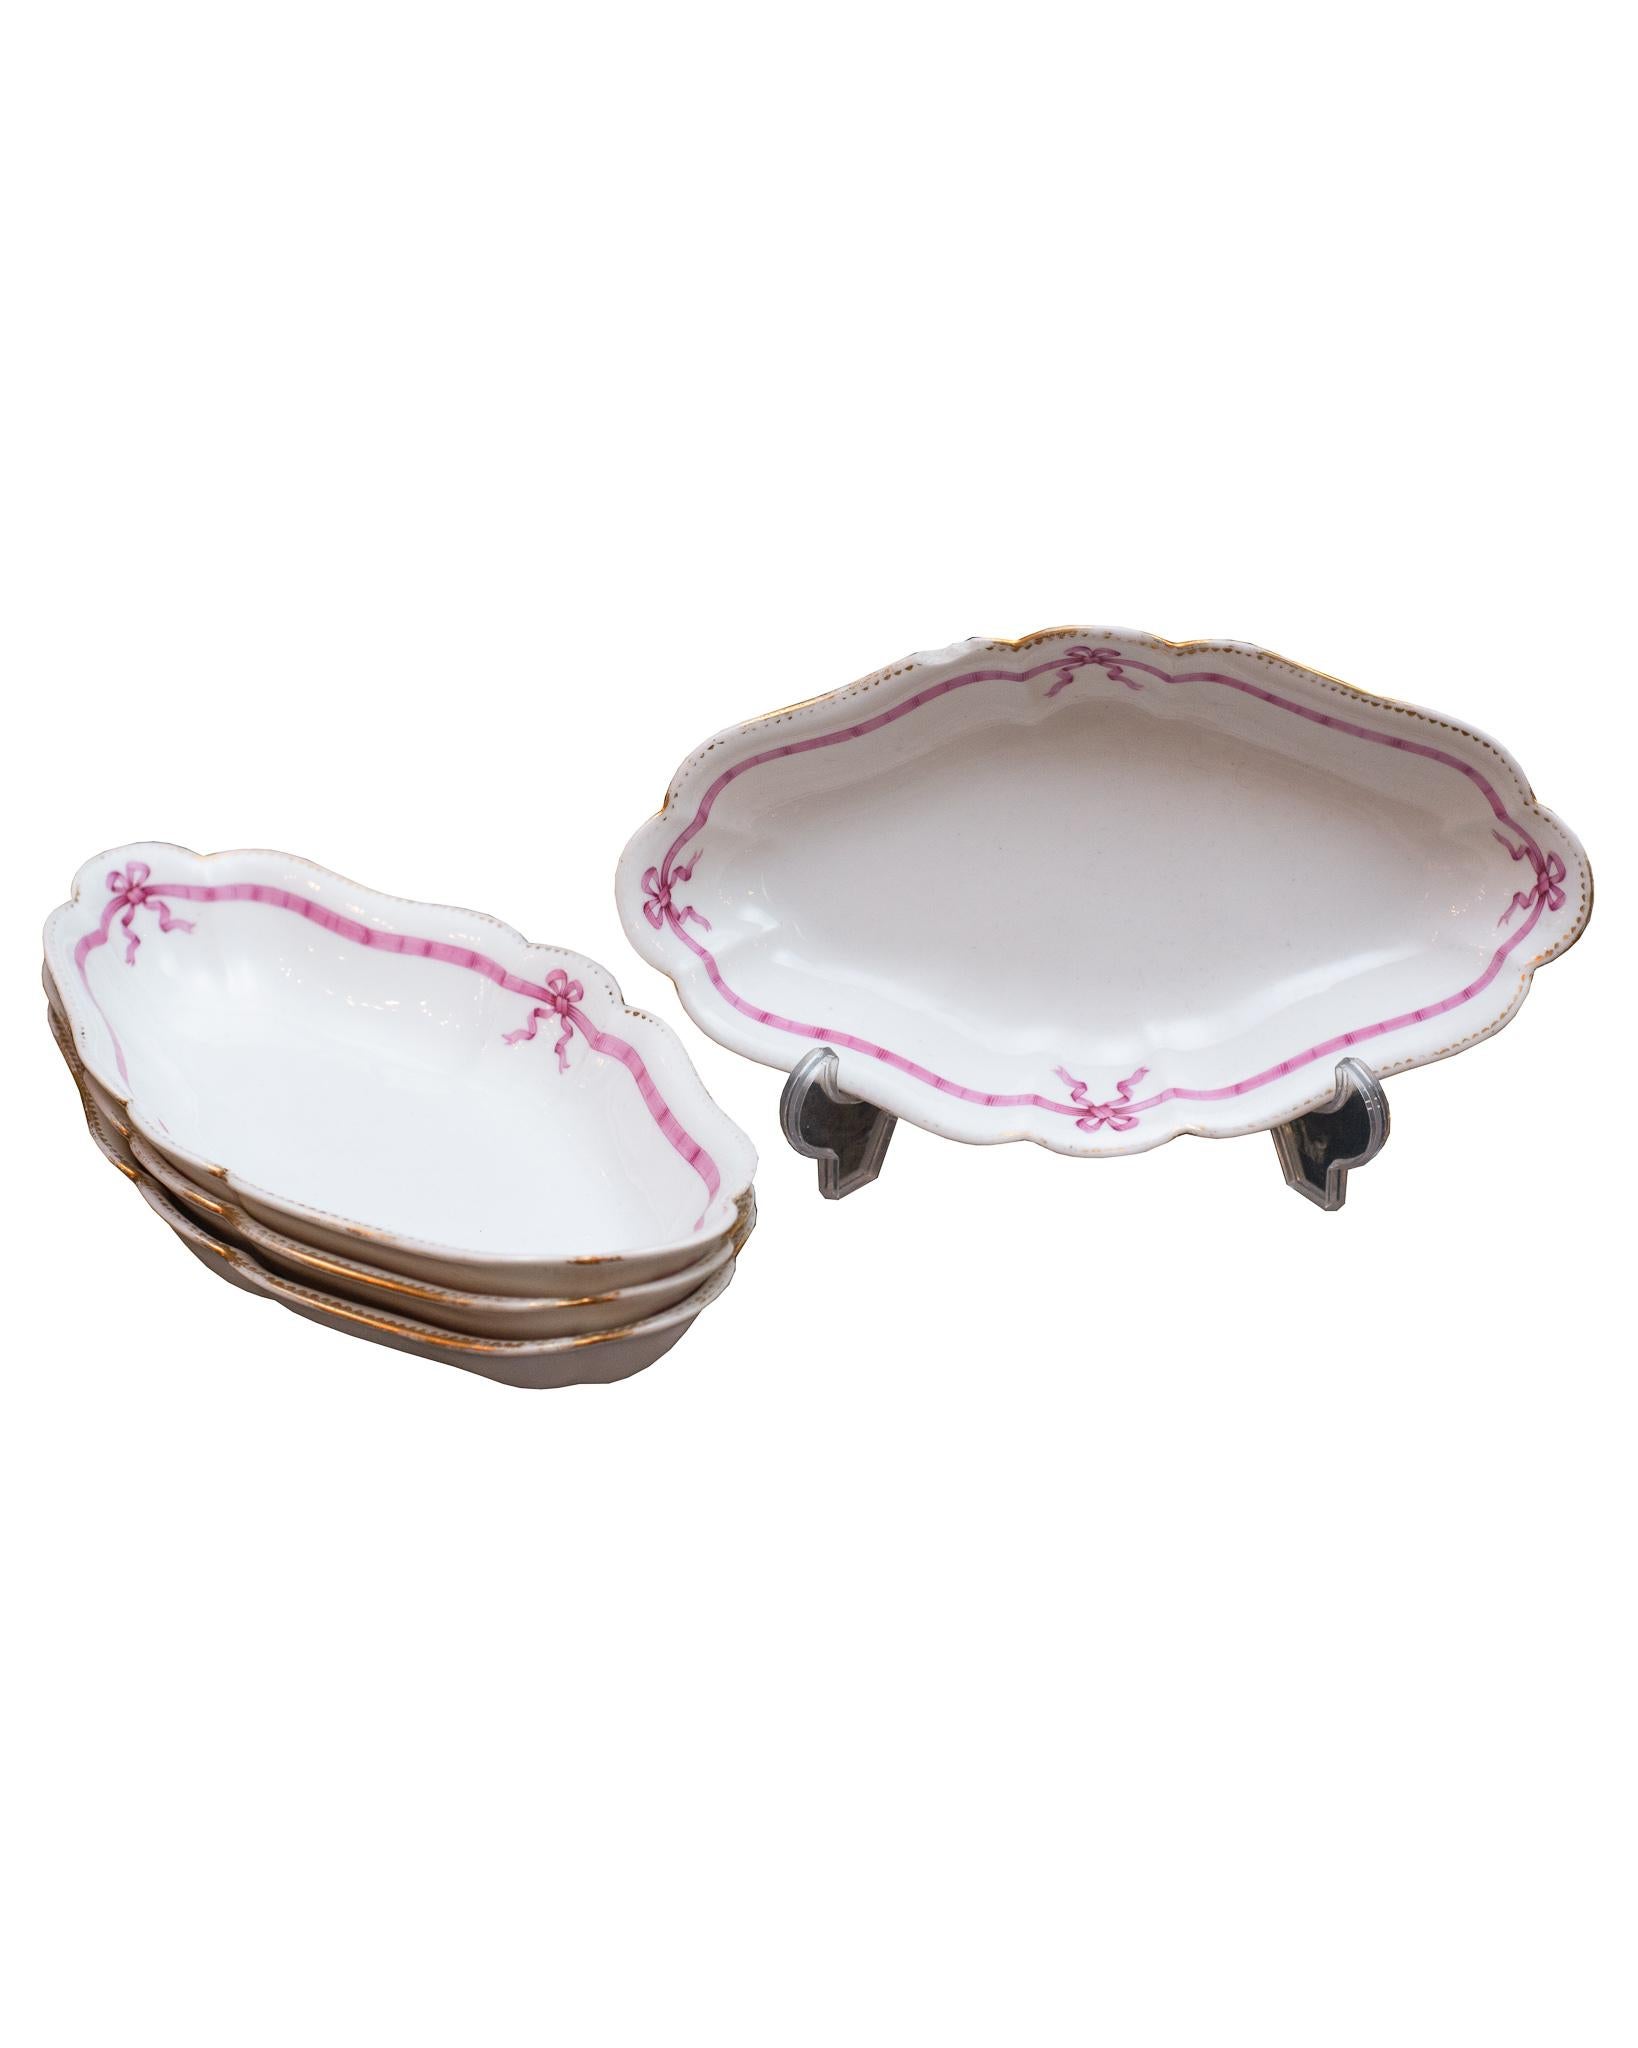 XIX secolo Antique French 22-Piece White Porcelain Set with Pink Ribbon Motif (set da pranzo in porcellana bianca con motivo a nastro rosa)